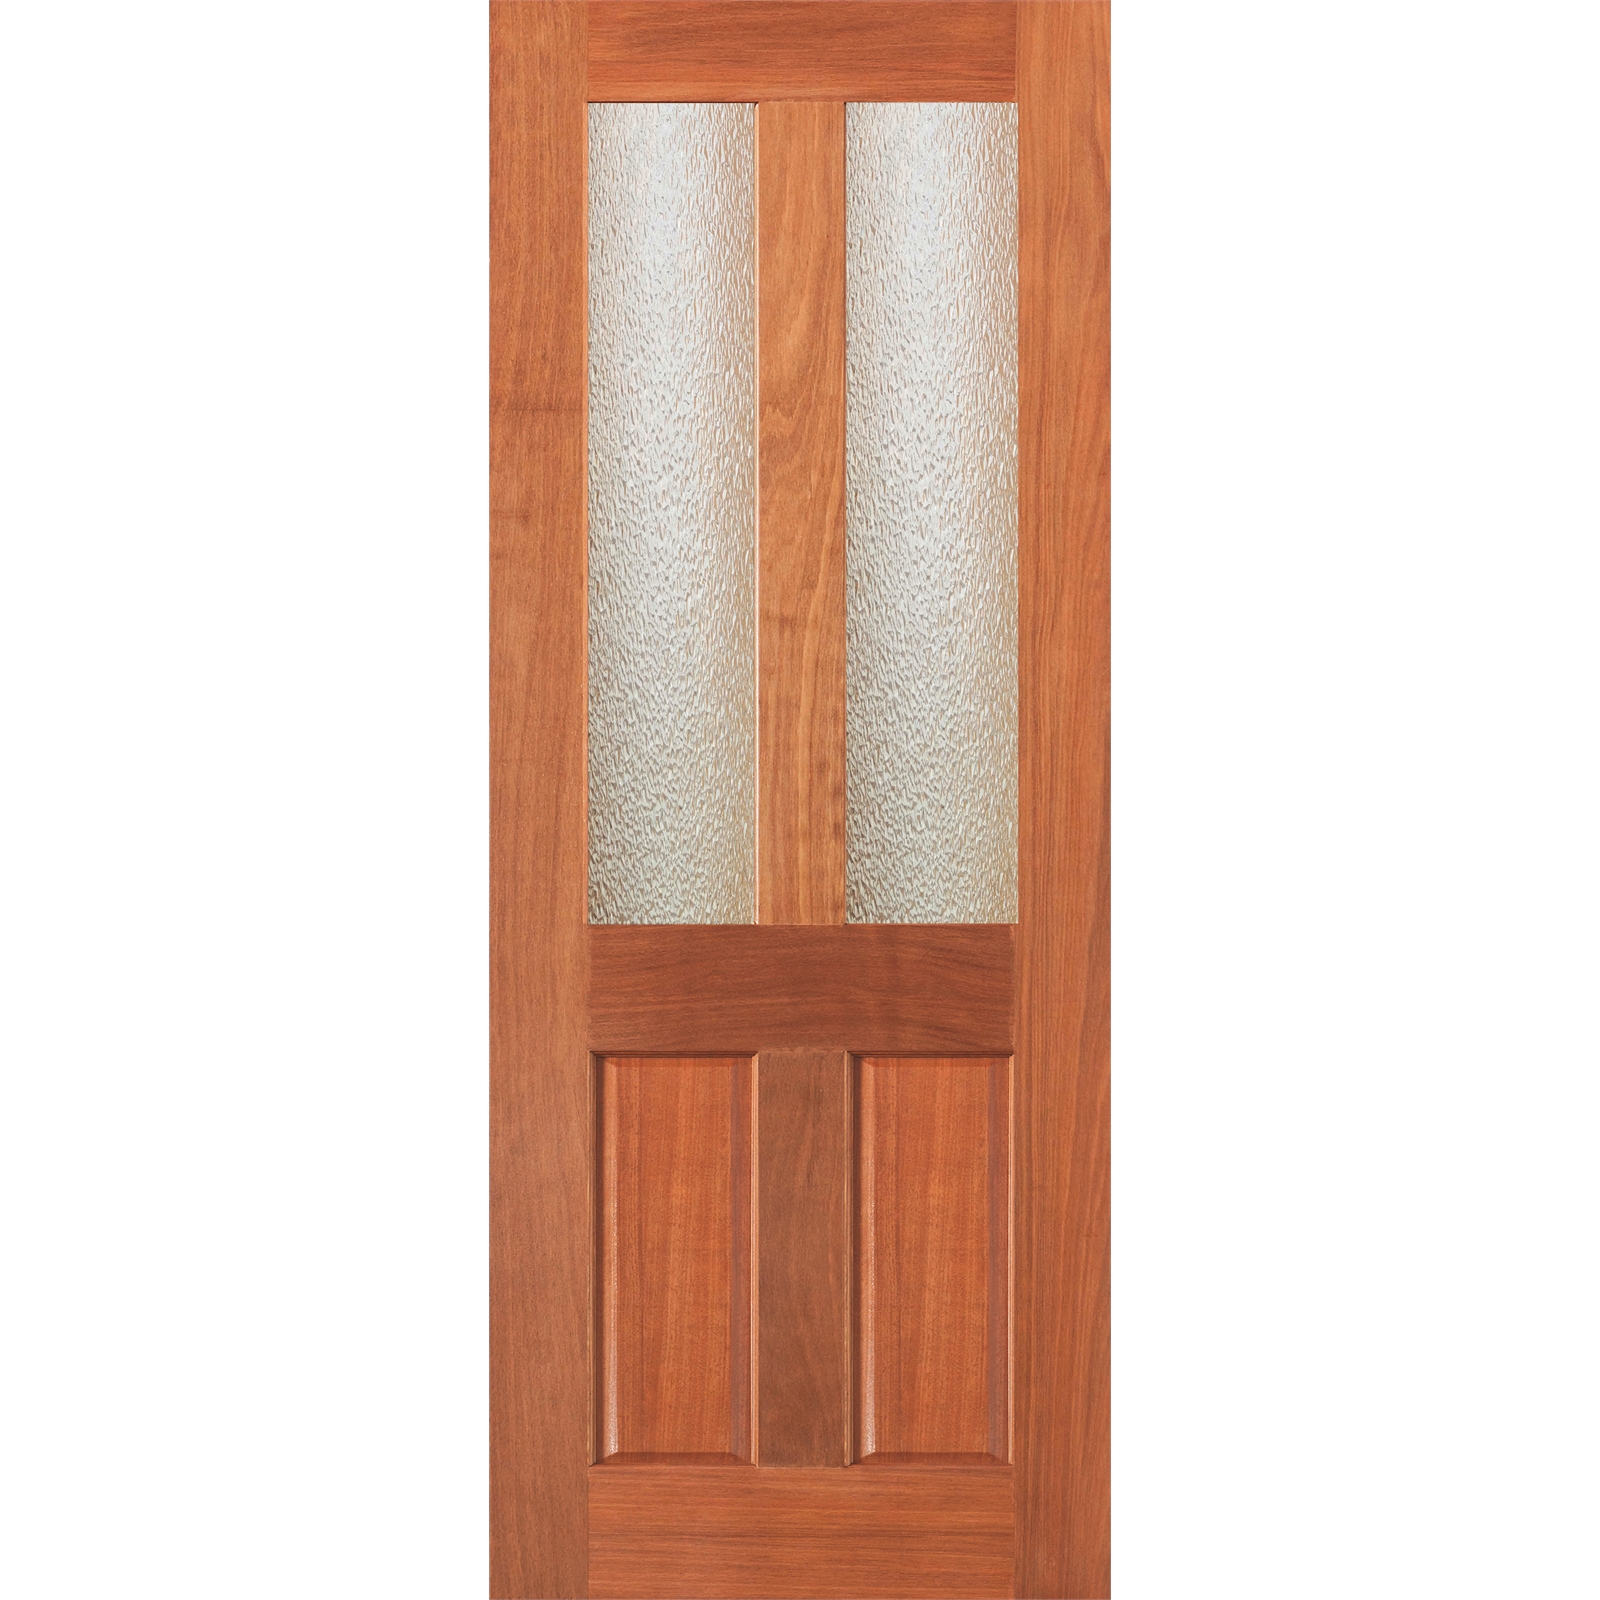 Woodcraft Doors 2040 x 820 x 40mm Cass Entrance Door With Diamond Safety Glass